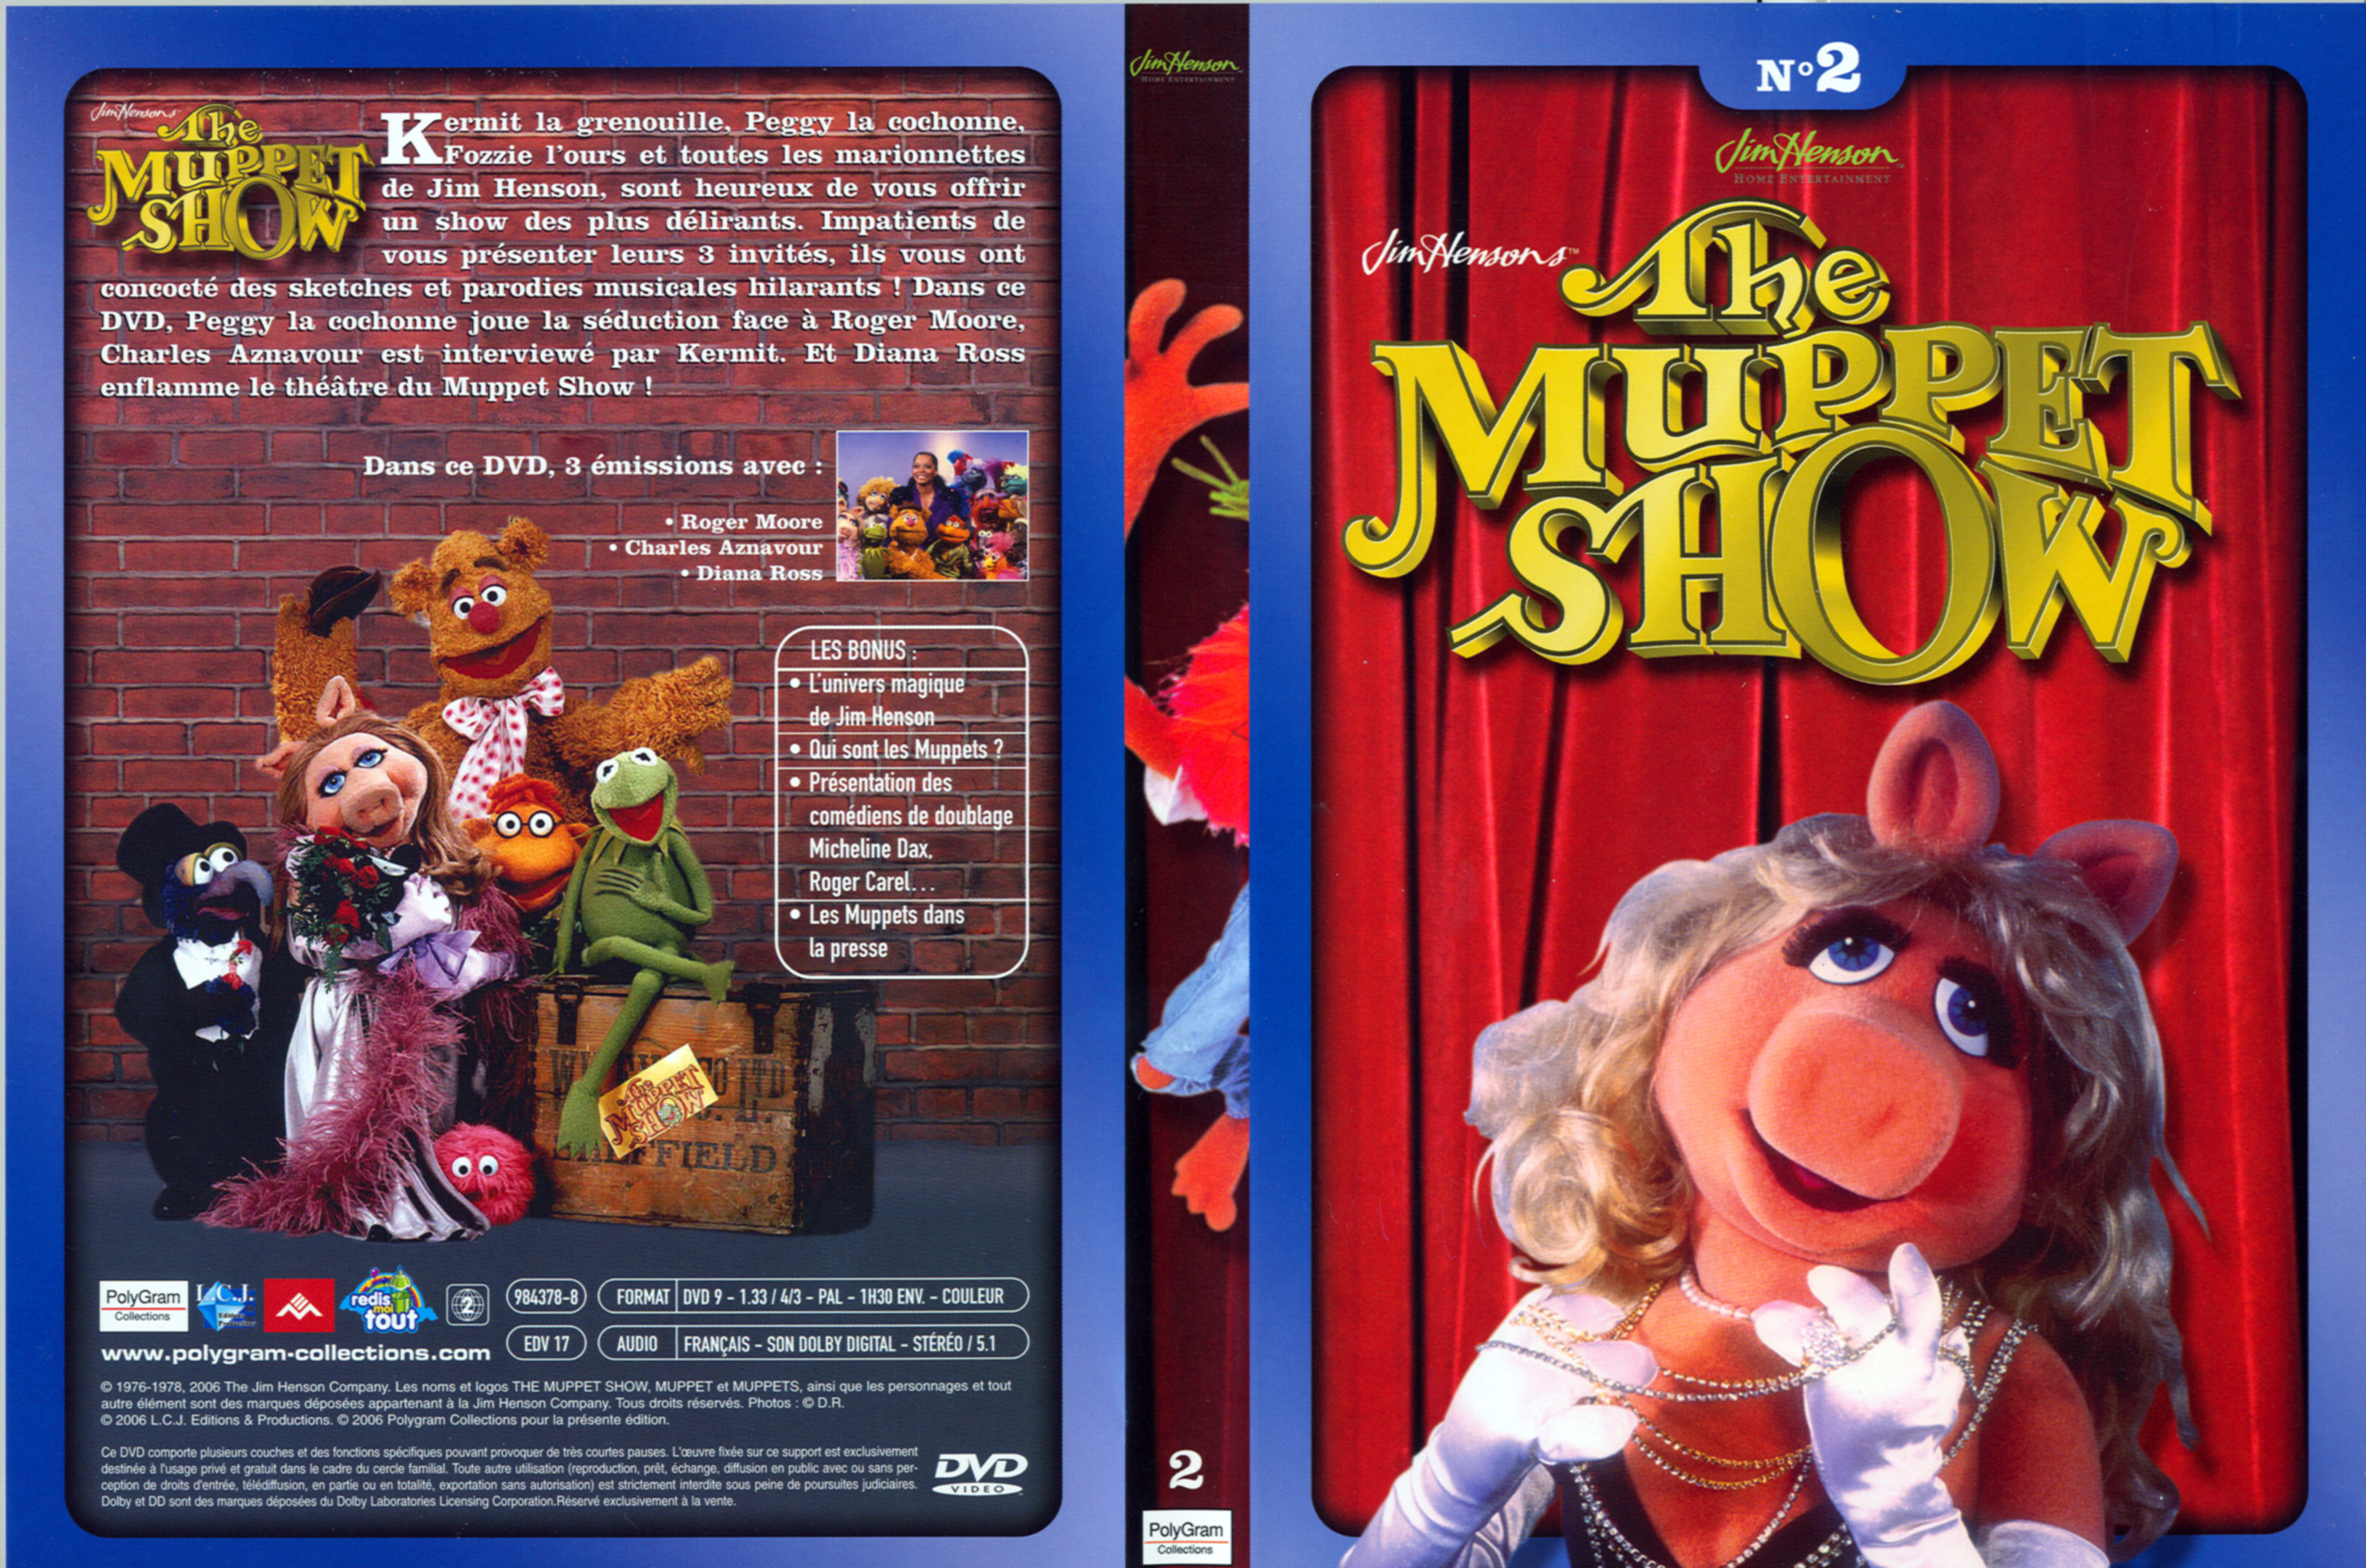 Jaquette DVD The muppet show vol 2